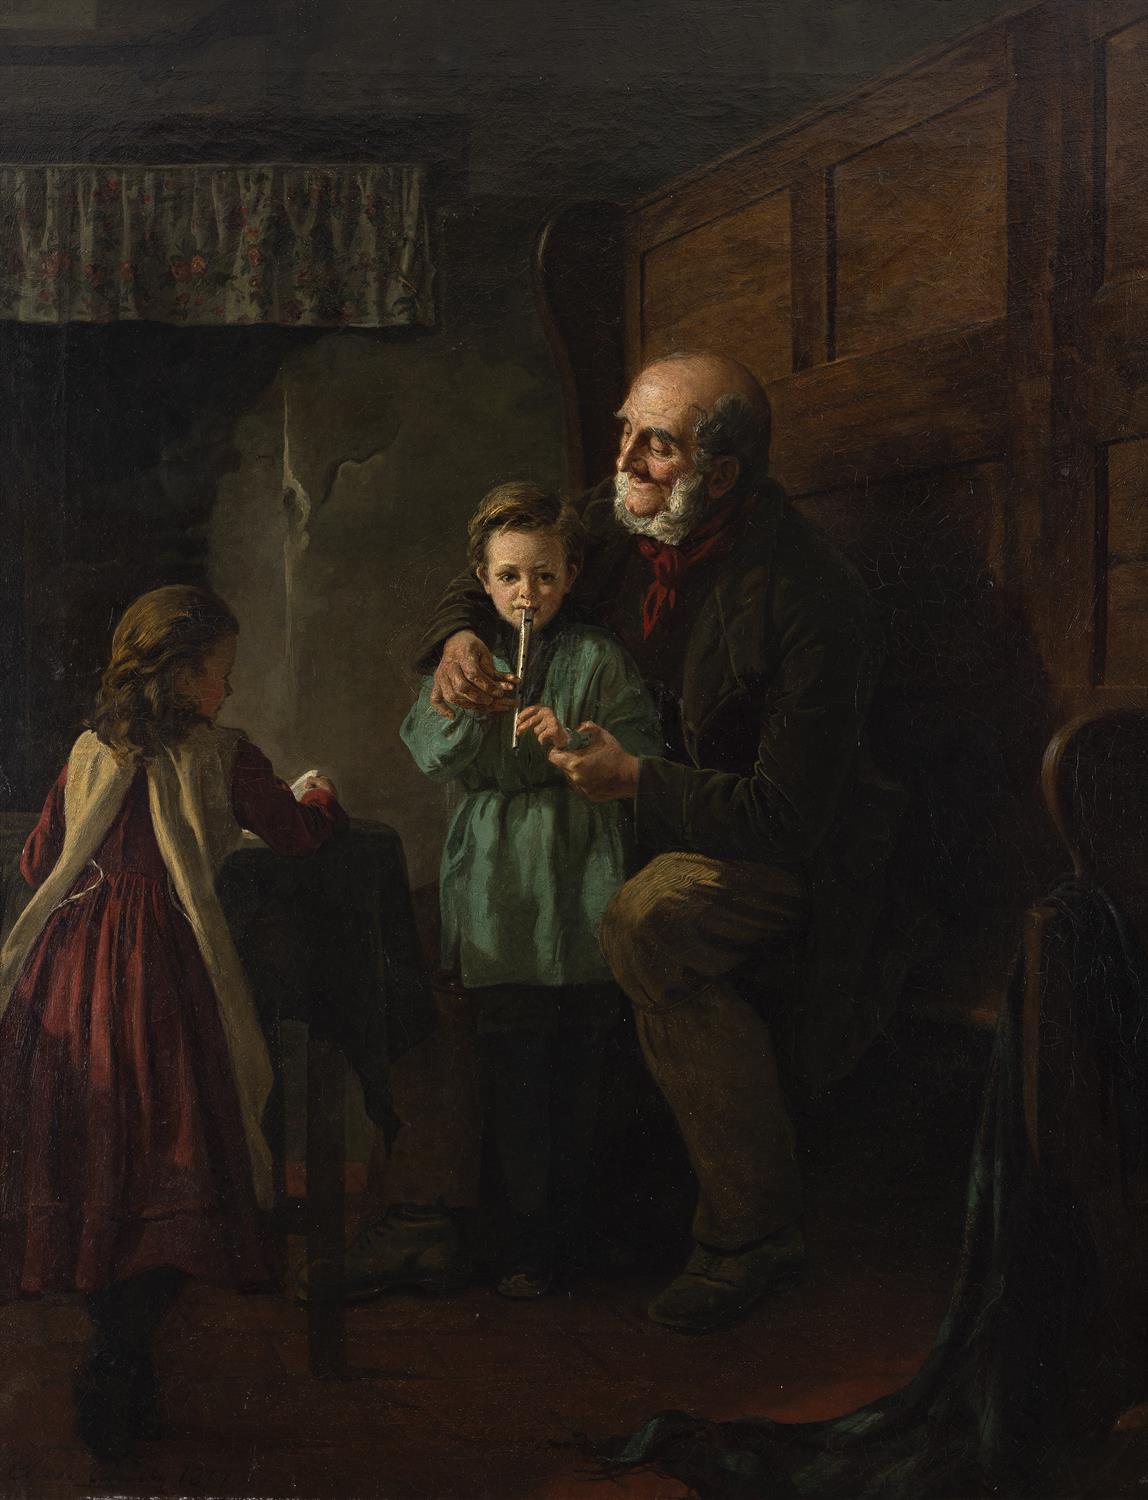 ELLEN CONOLLY RA (FL. 1873-85) A Music Lesson Oil on canvas, 89.5 x 69.5cm (35¼ x 27¼") Signed